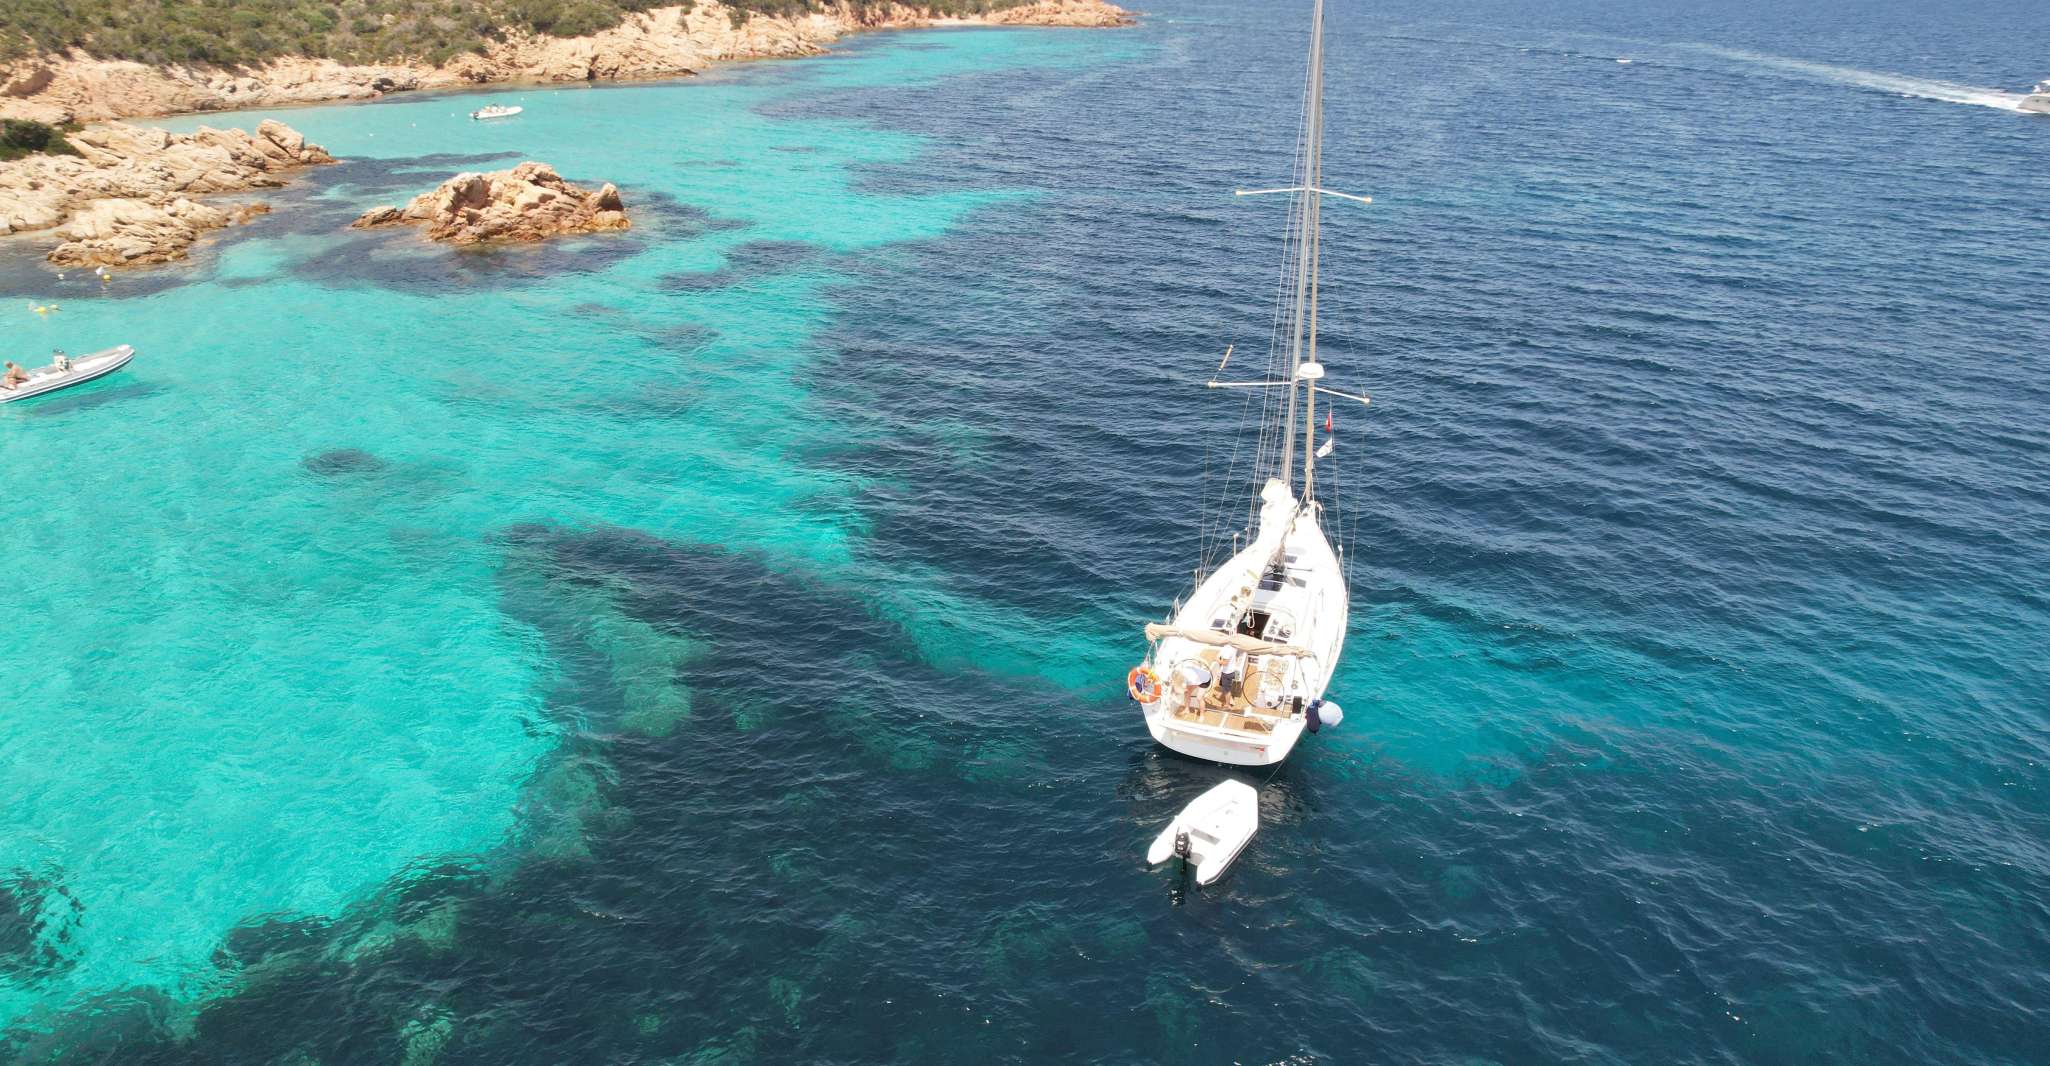 Poltu Quatu, La Maddalena Archipelago Sailboat full-day trip - Housity